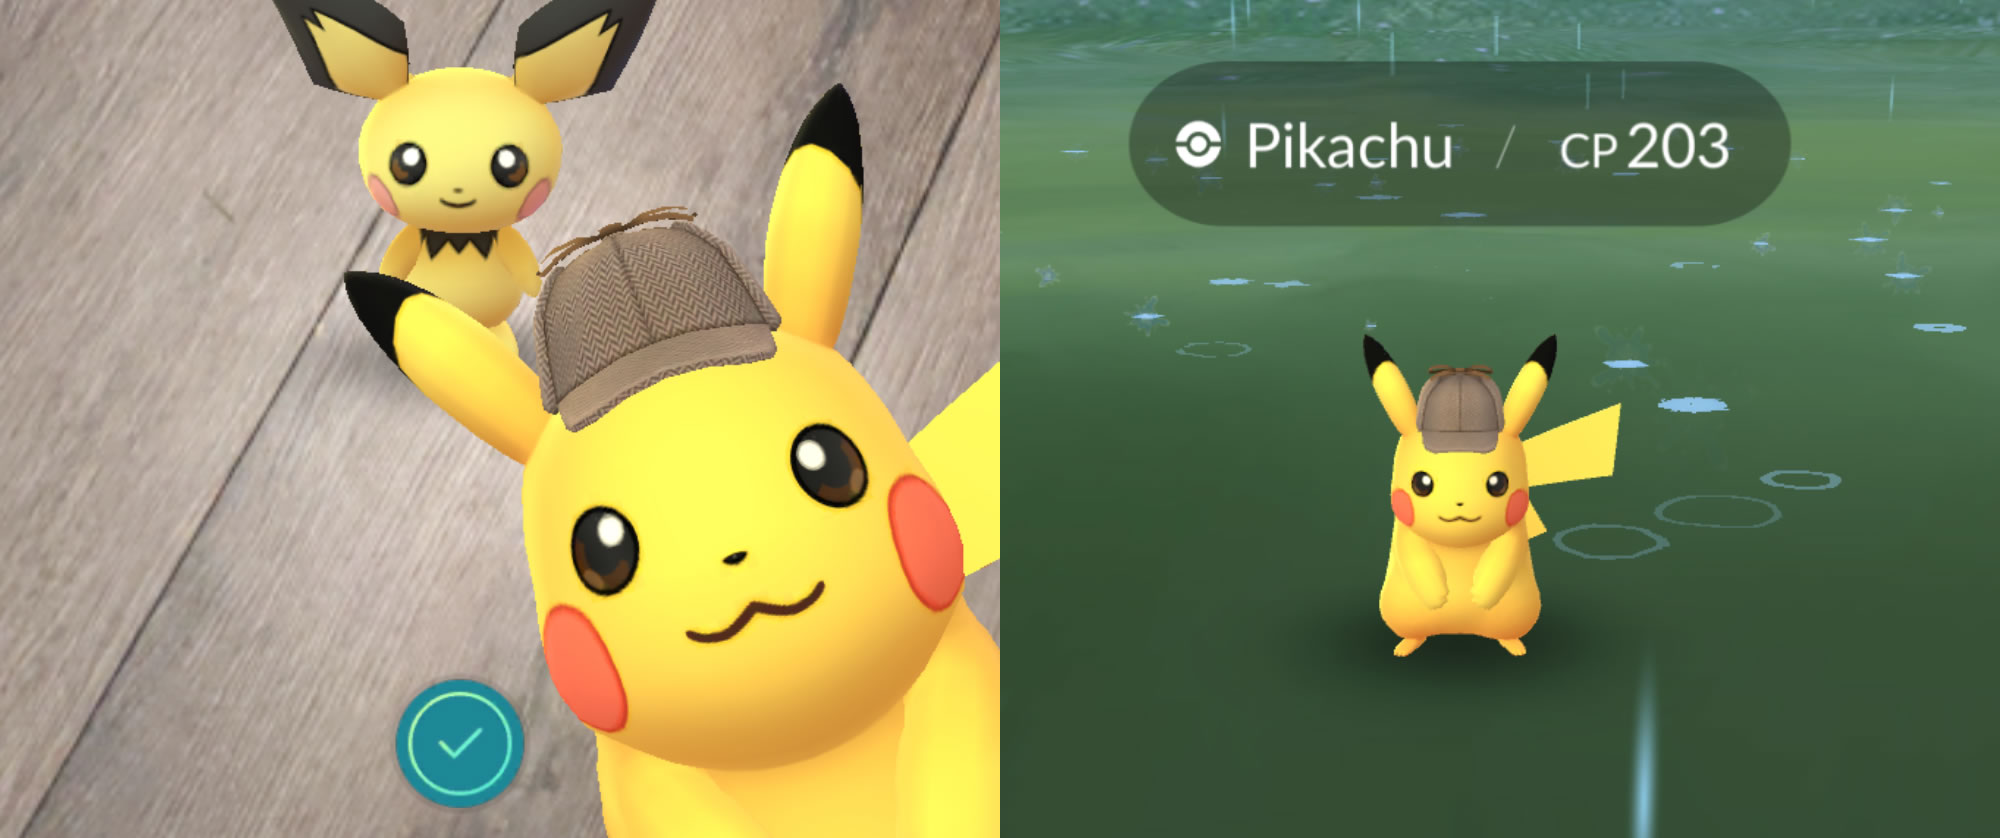 catch_detective_pikachu_pokemon_go.jpg